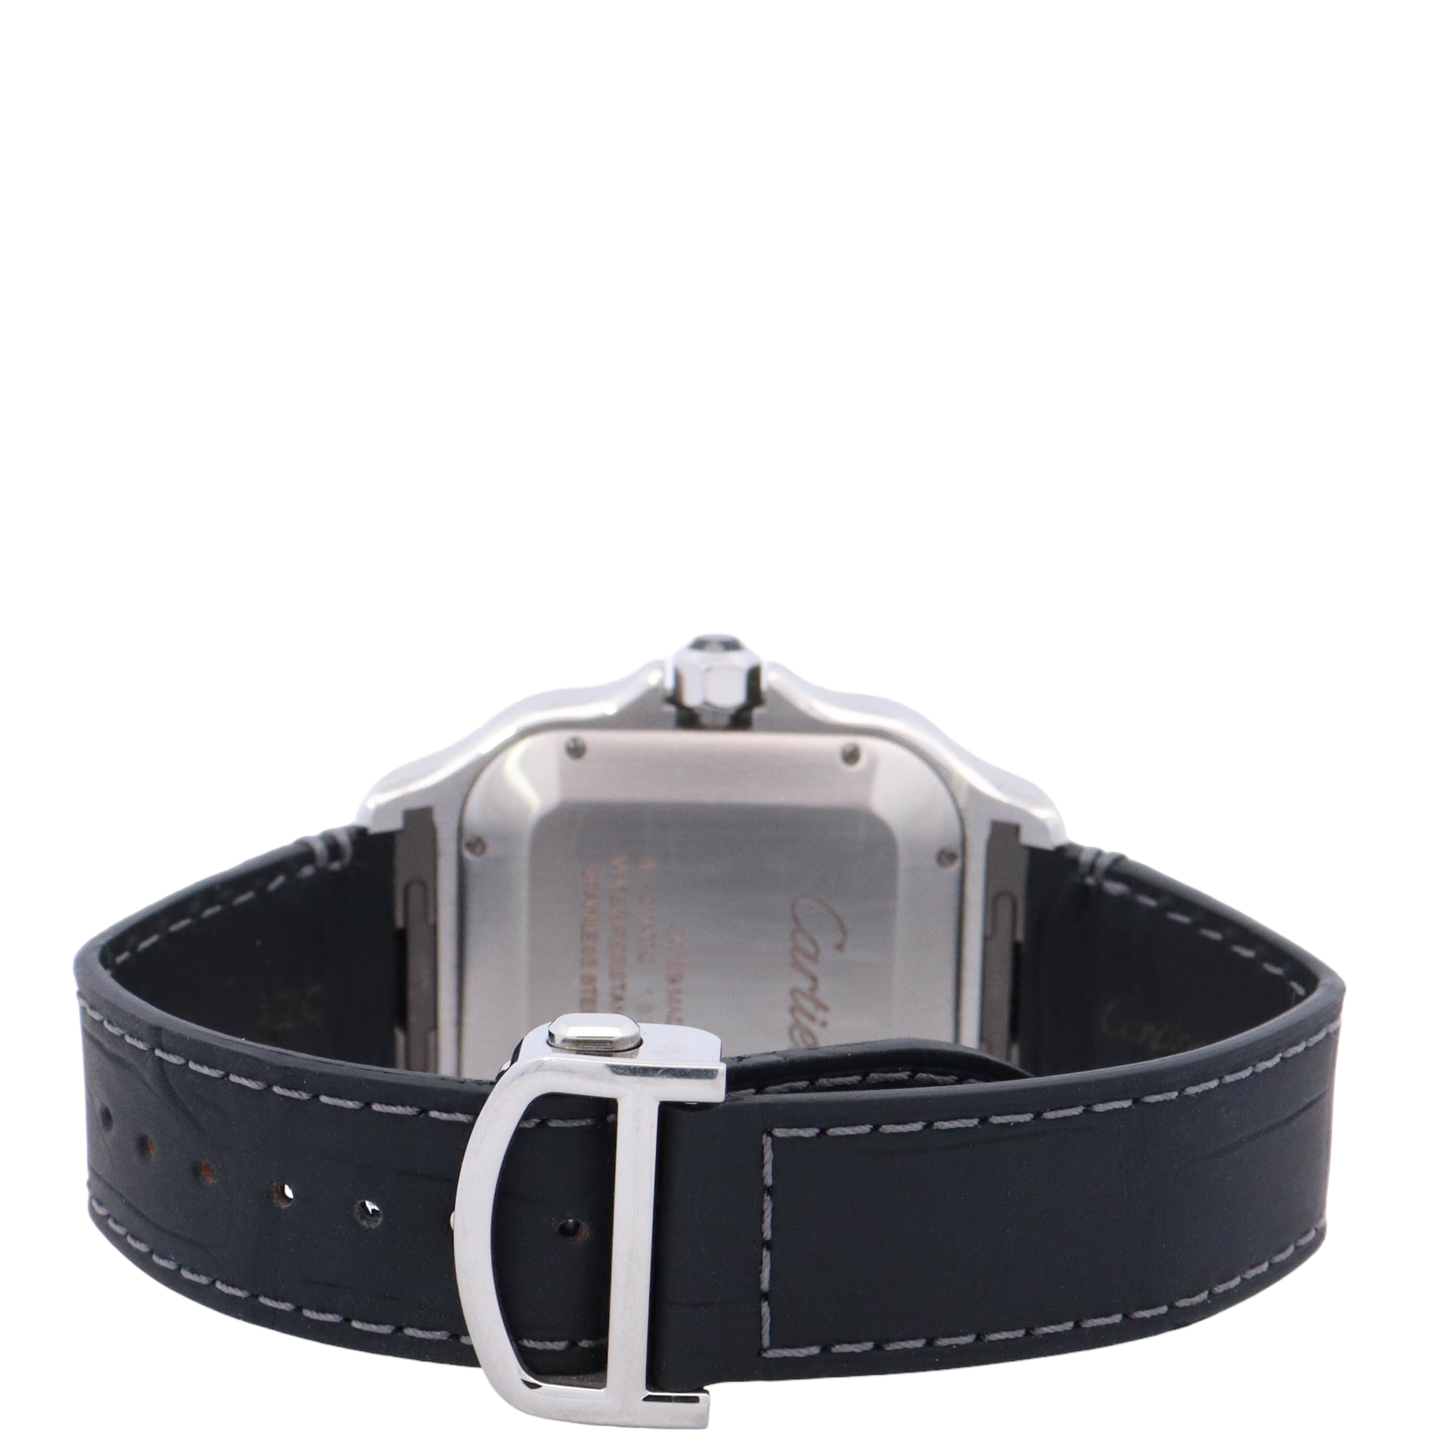 Cartier Santos XL 43.3mm Stainless Steel White Roman Watch Reference# WSSA0017